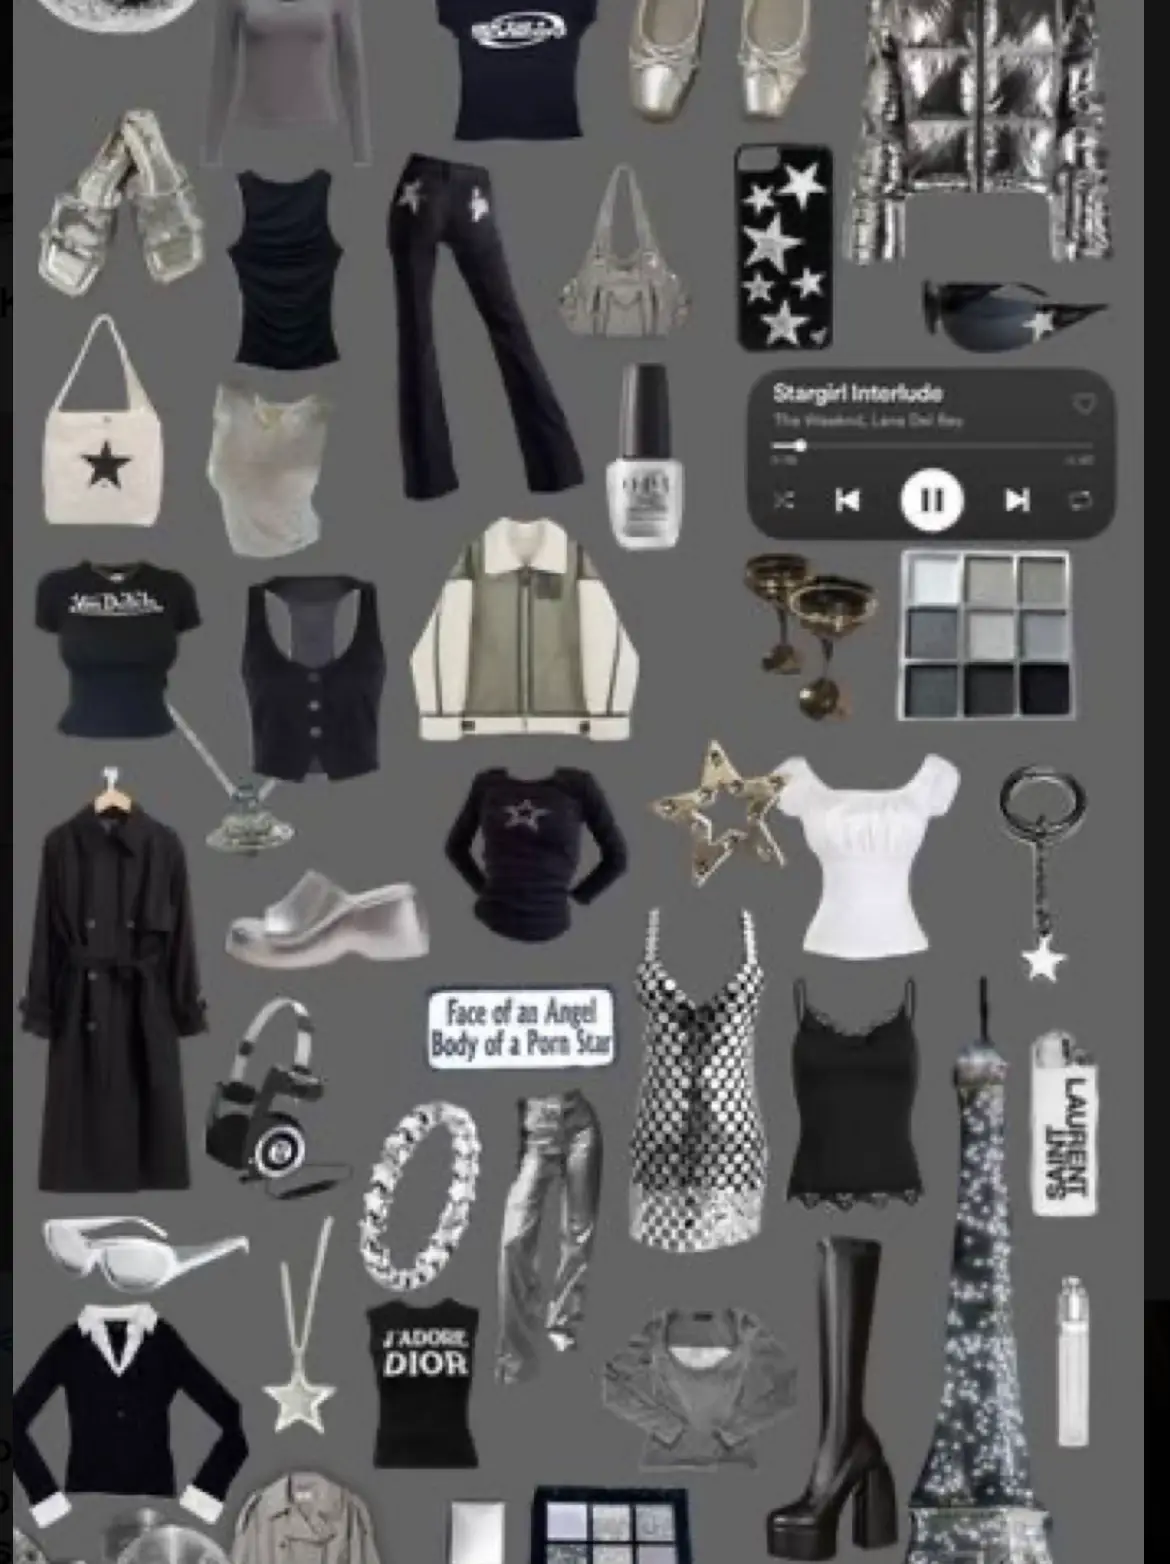 Fashion Rockmore Gothic PU Leather Corset Women Punk Style Buckle Zipper Crop  Top Wear @ Best Price Online